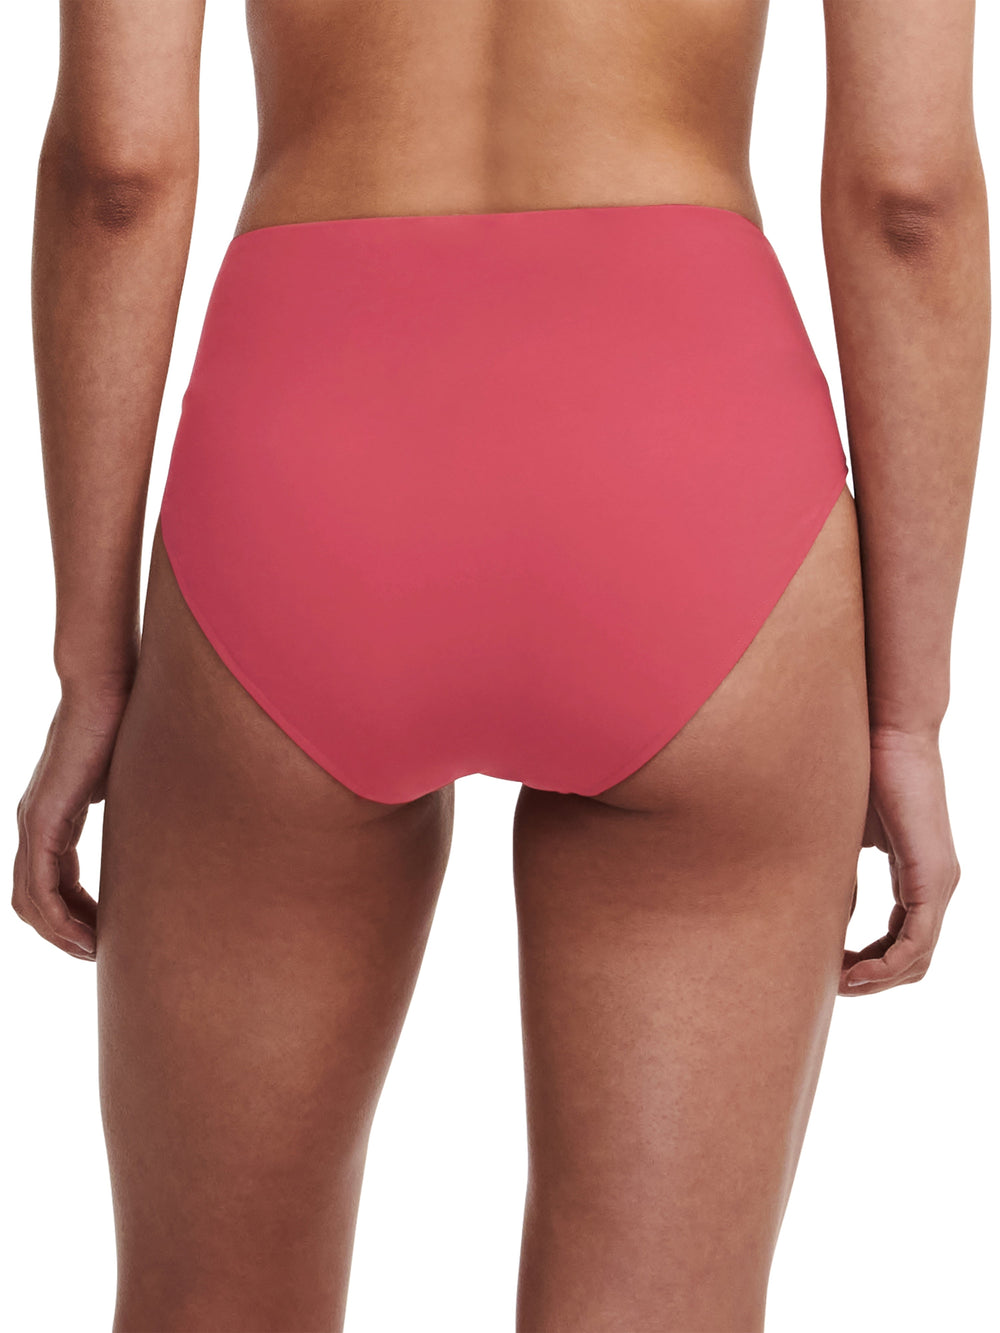 Chantelle Swimwear Inspire Full Brief - Garnet Red Full Bikini Brief Chantelle 